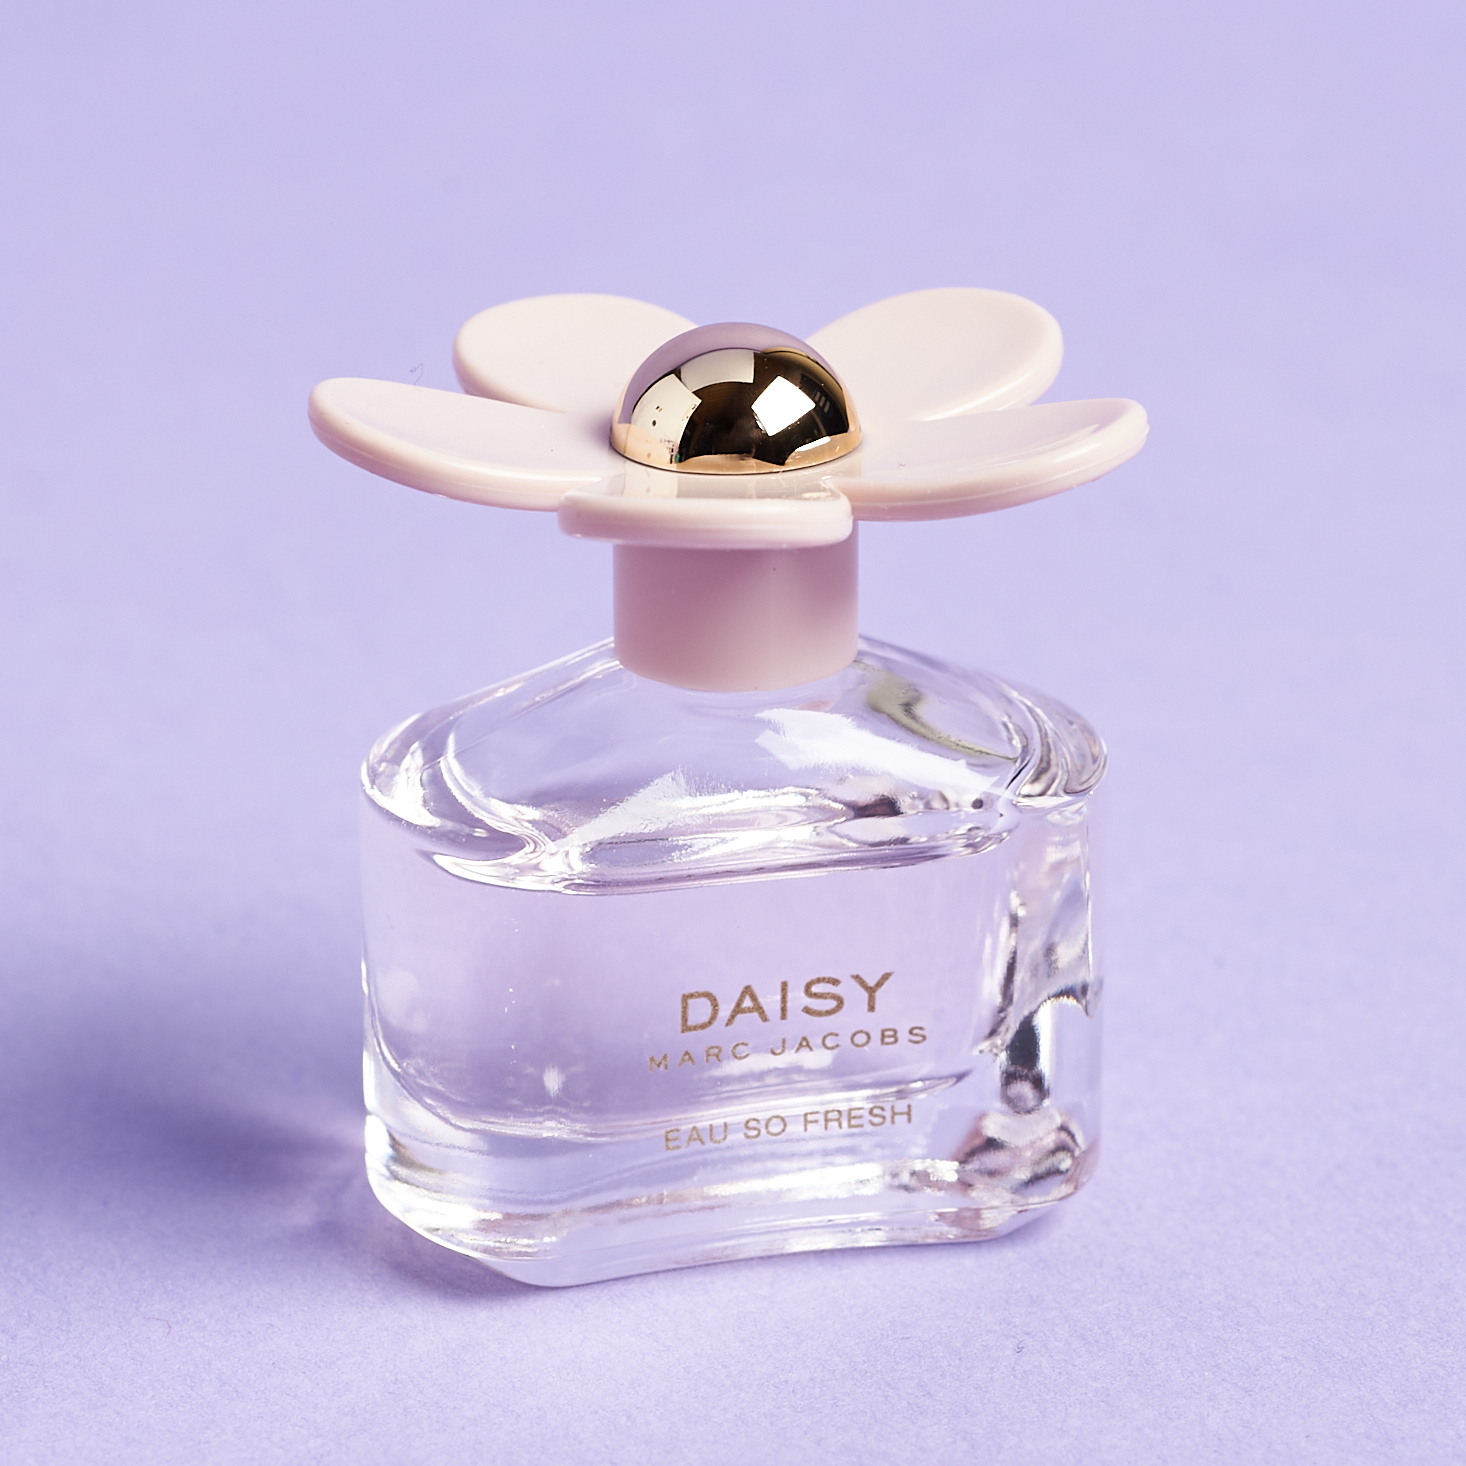 Sephora Favorites: Scent the Look Mini Perfume Review - February